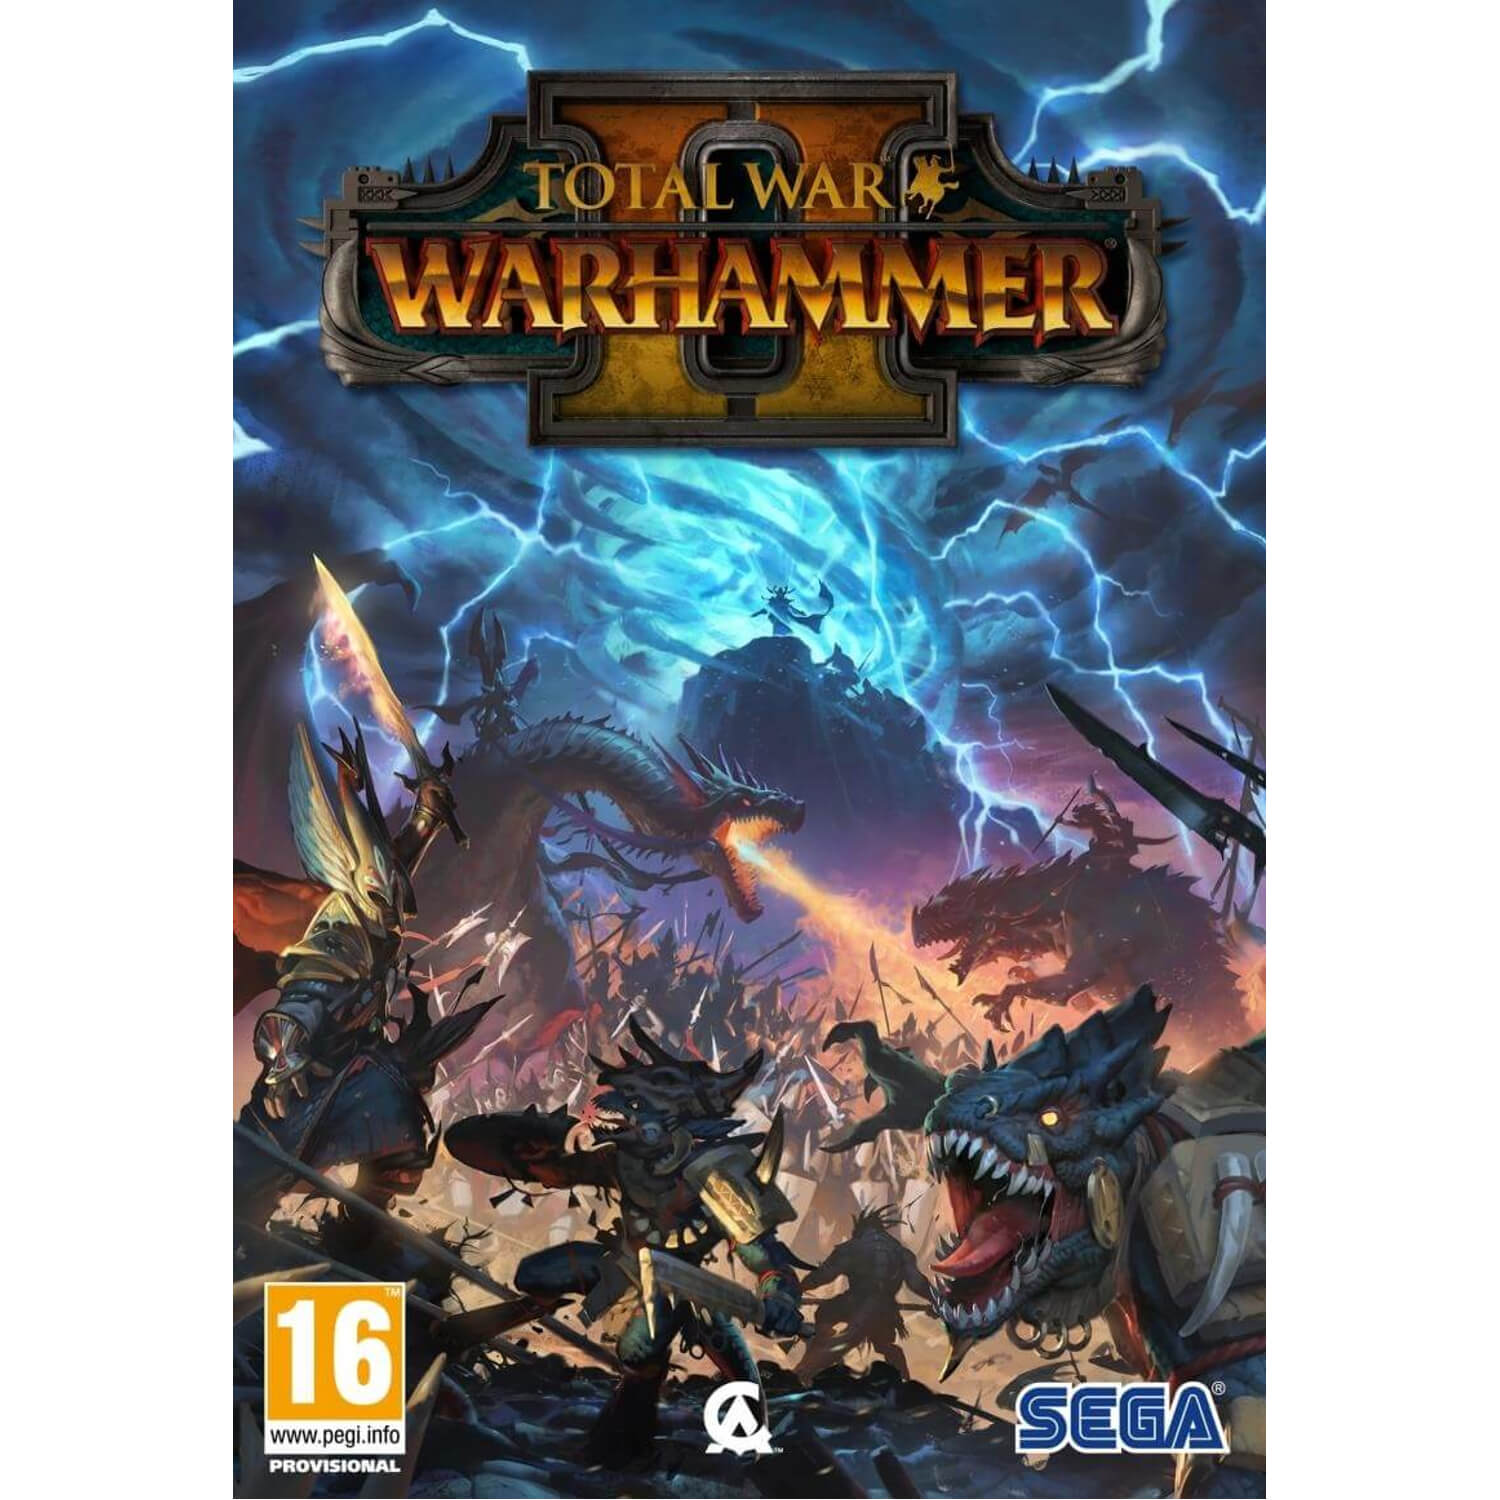  Joc PC Total War Warhammer 2 